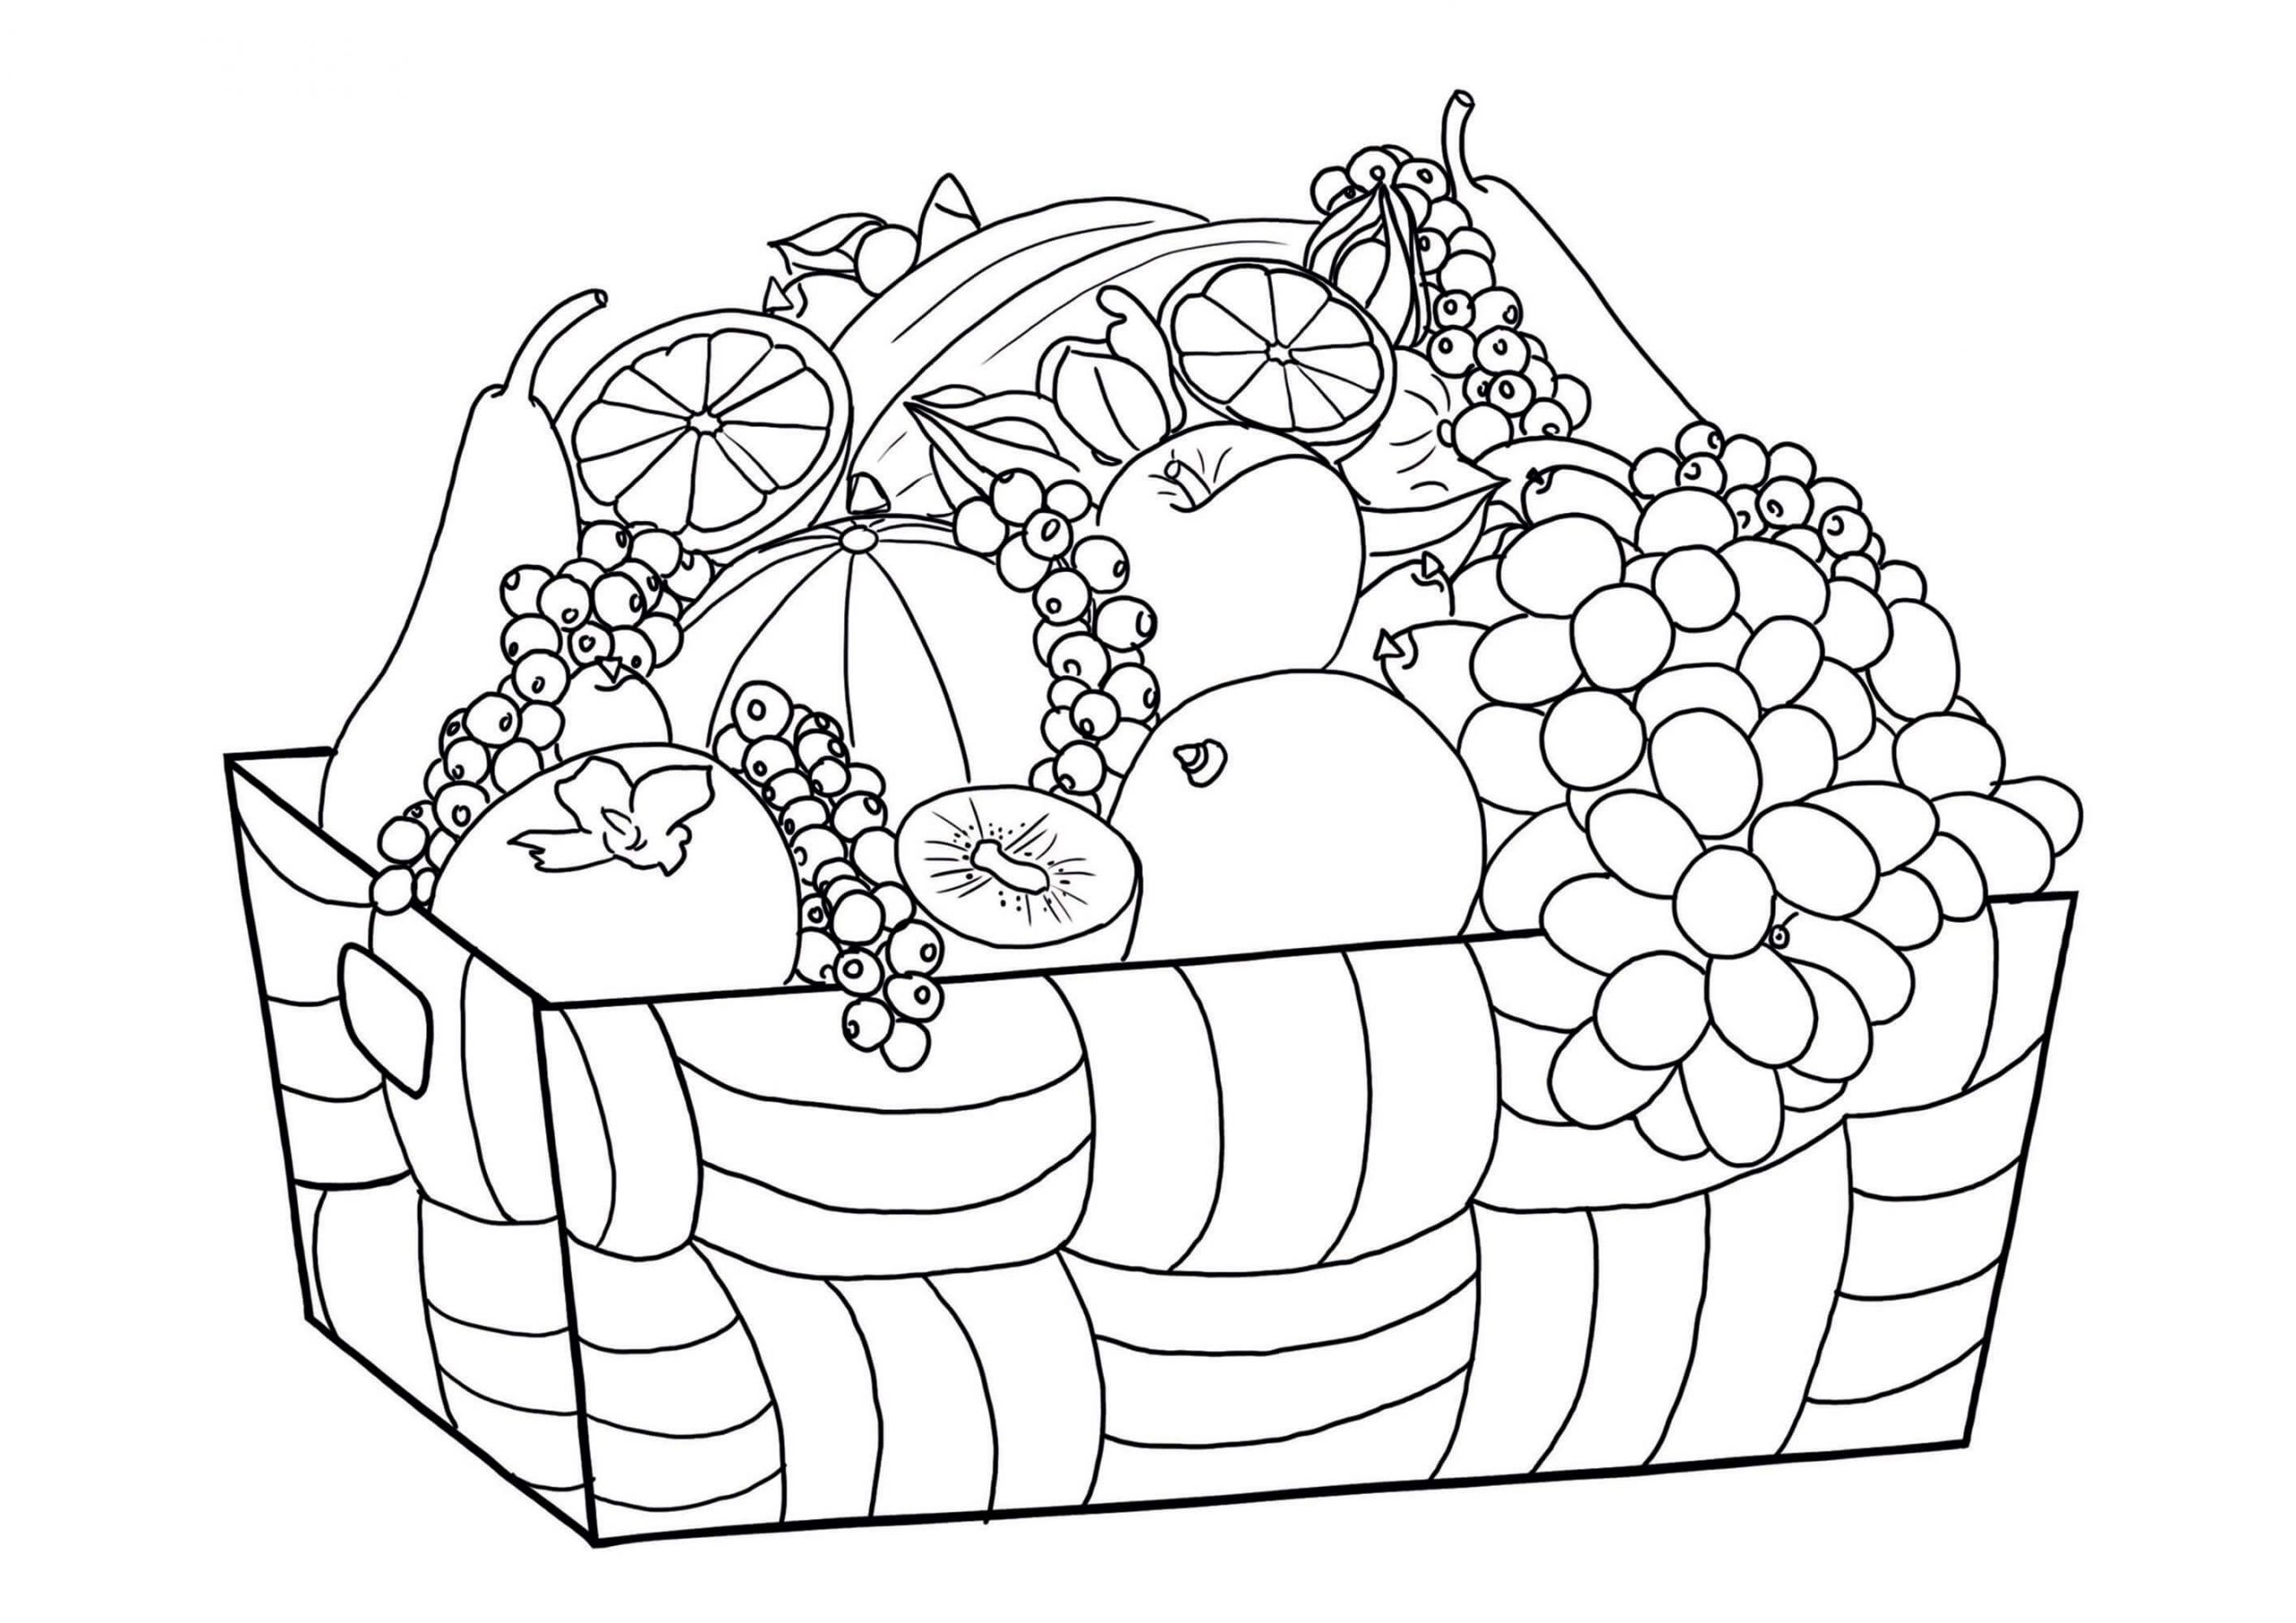 Frutas e Legumes na Caixa para colorir